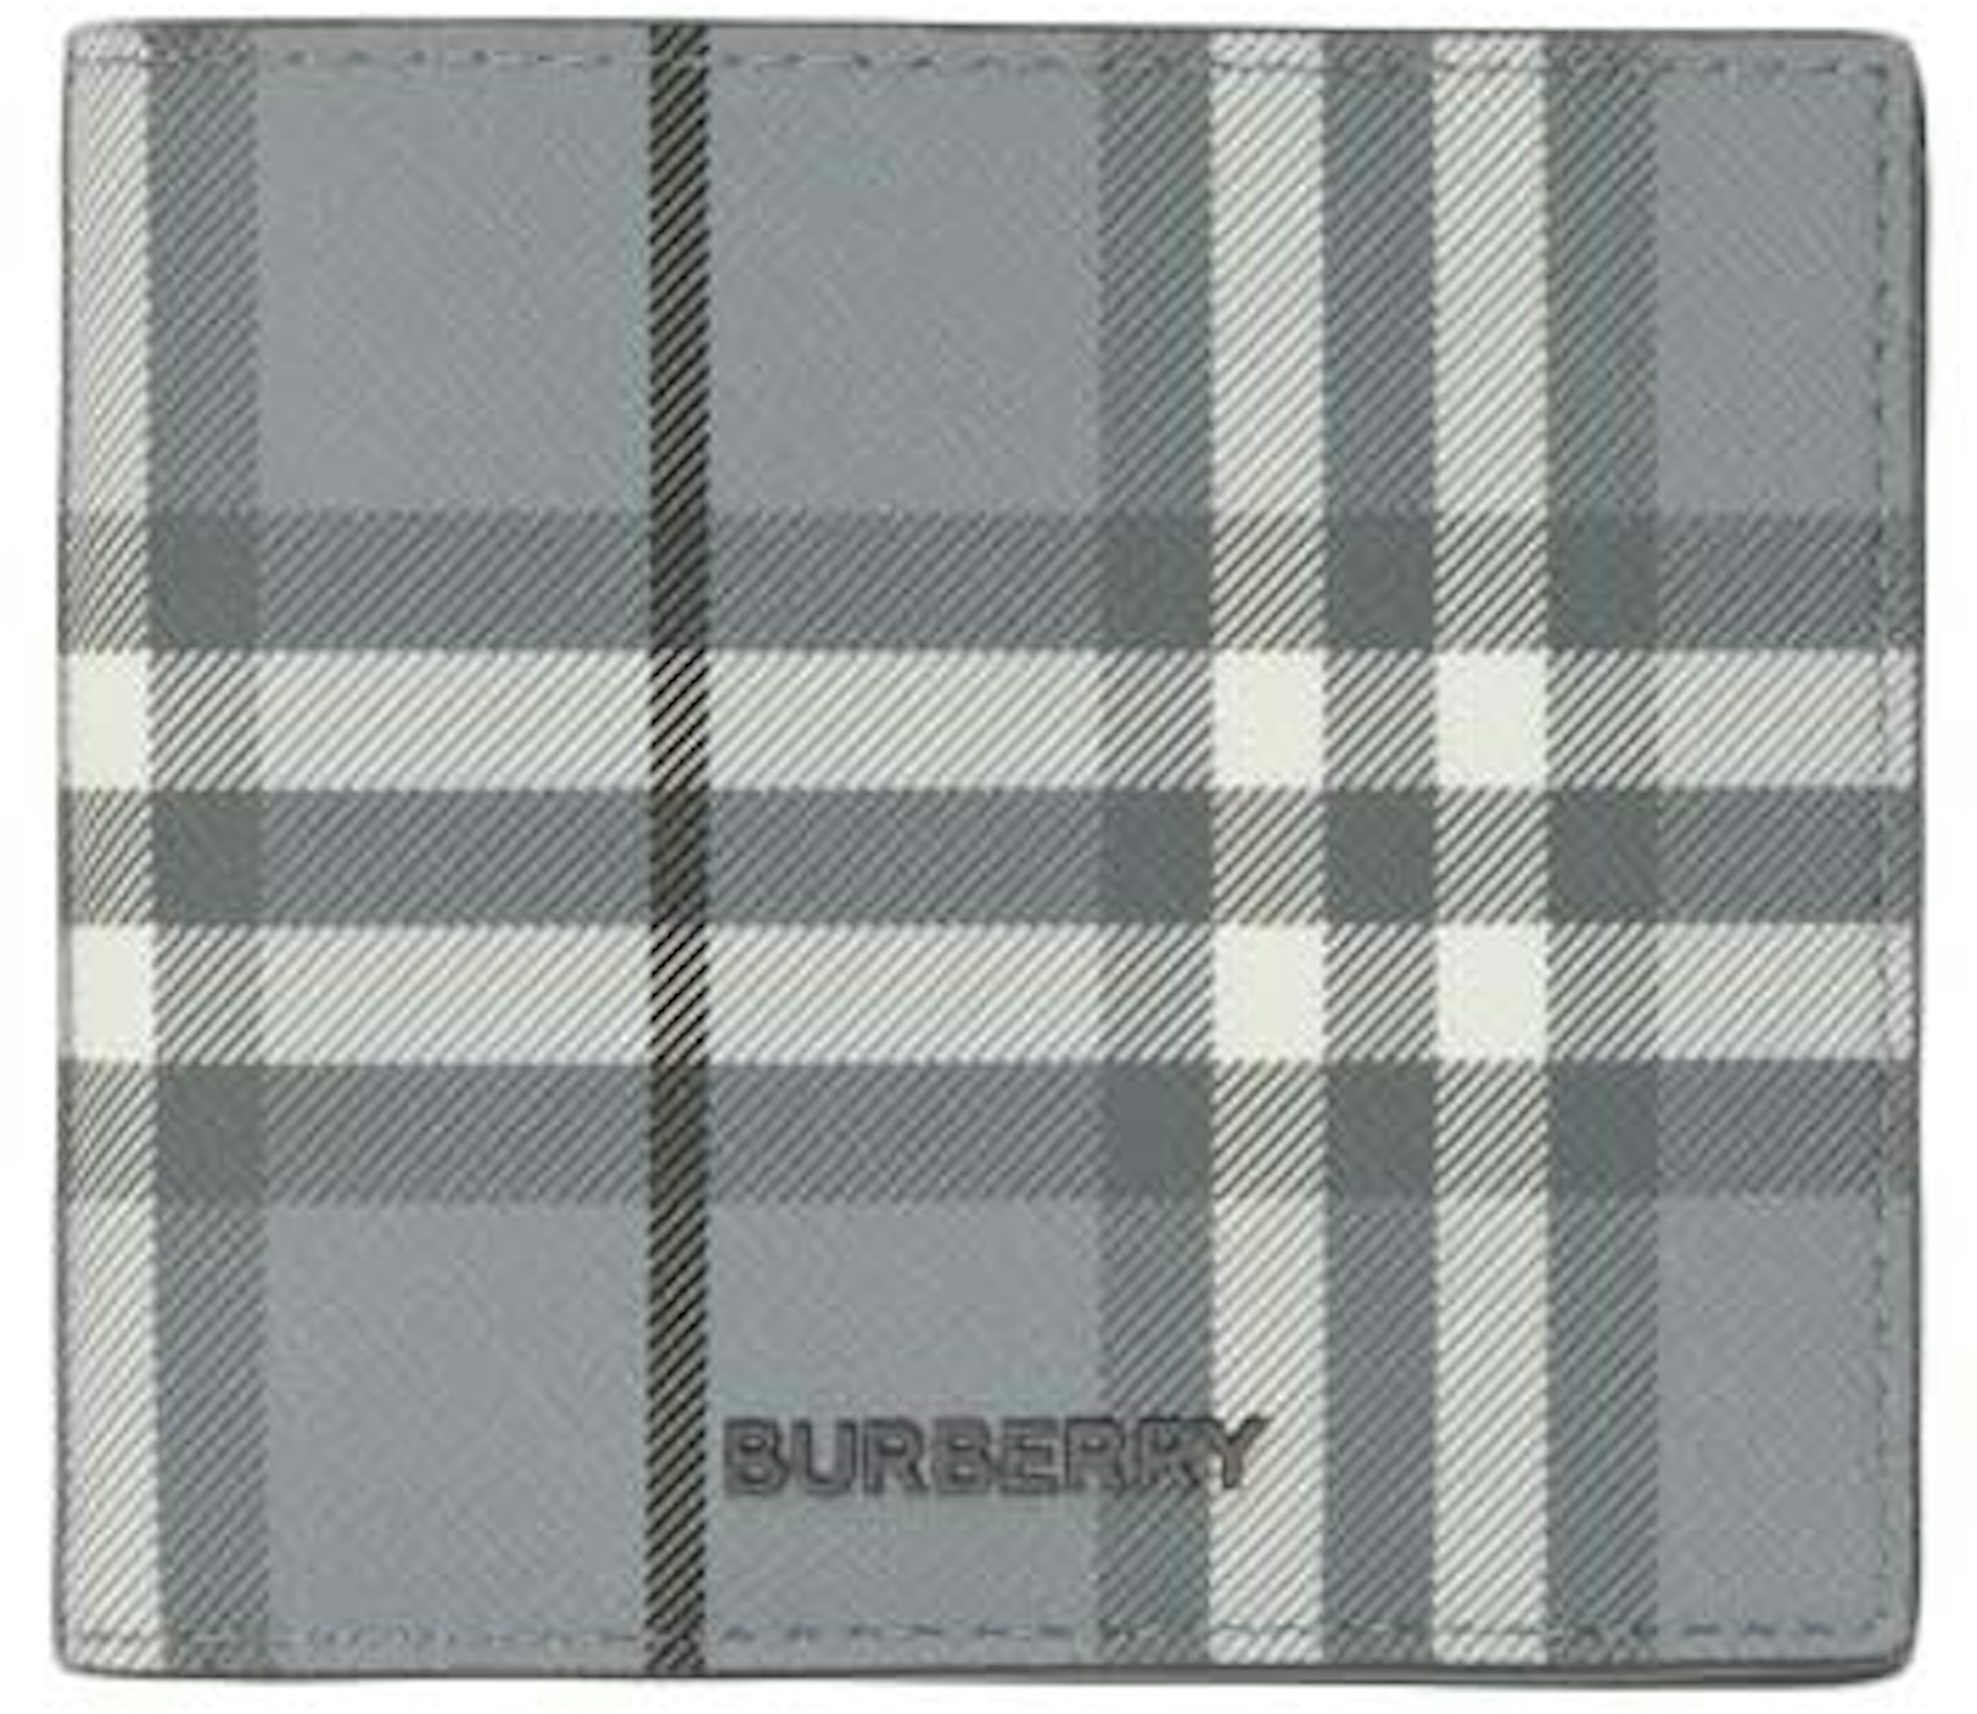 Burberry Vintage Check Bifold Wallet (8 Card Slot) Storm Grey Check